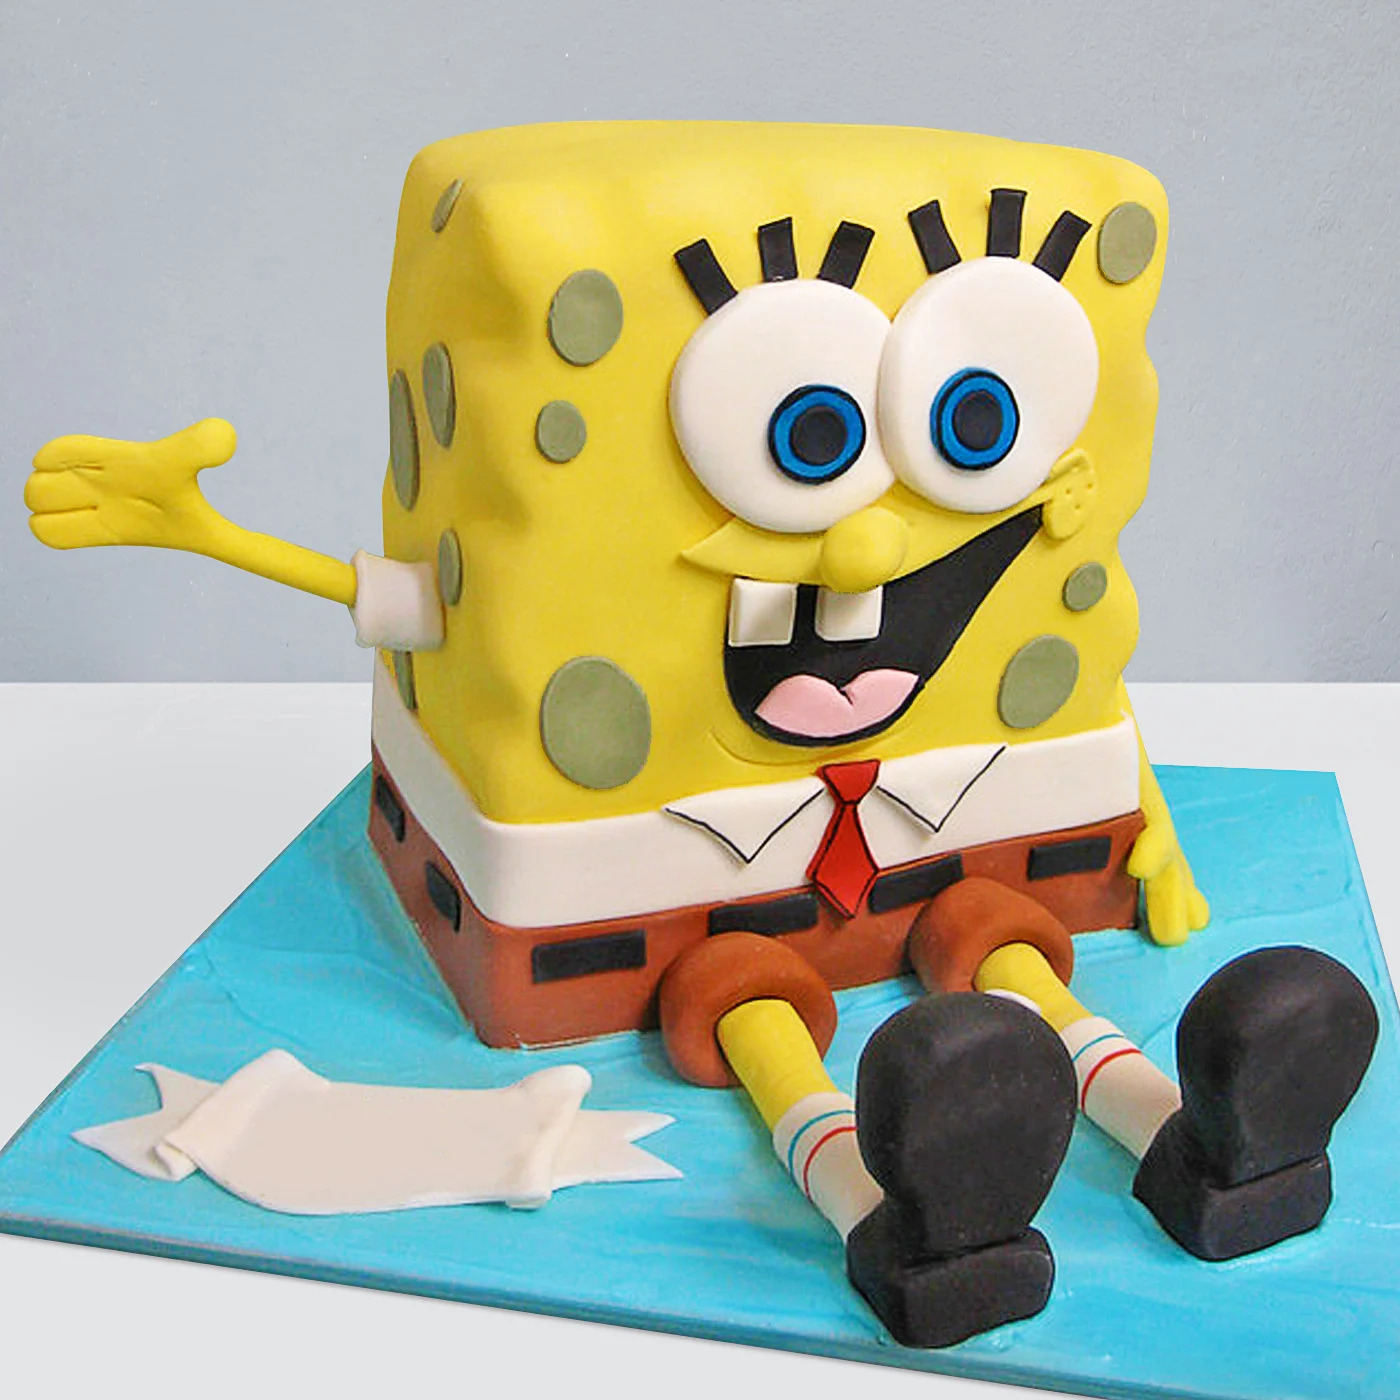 Spongebob Cake for a Birthday